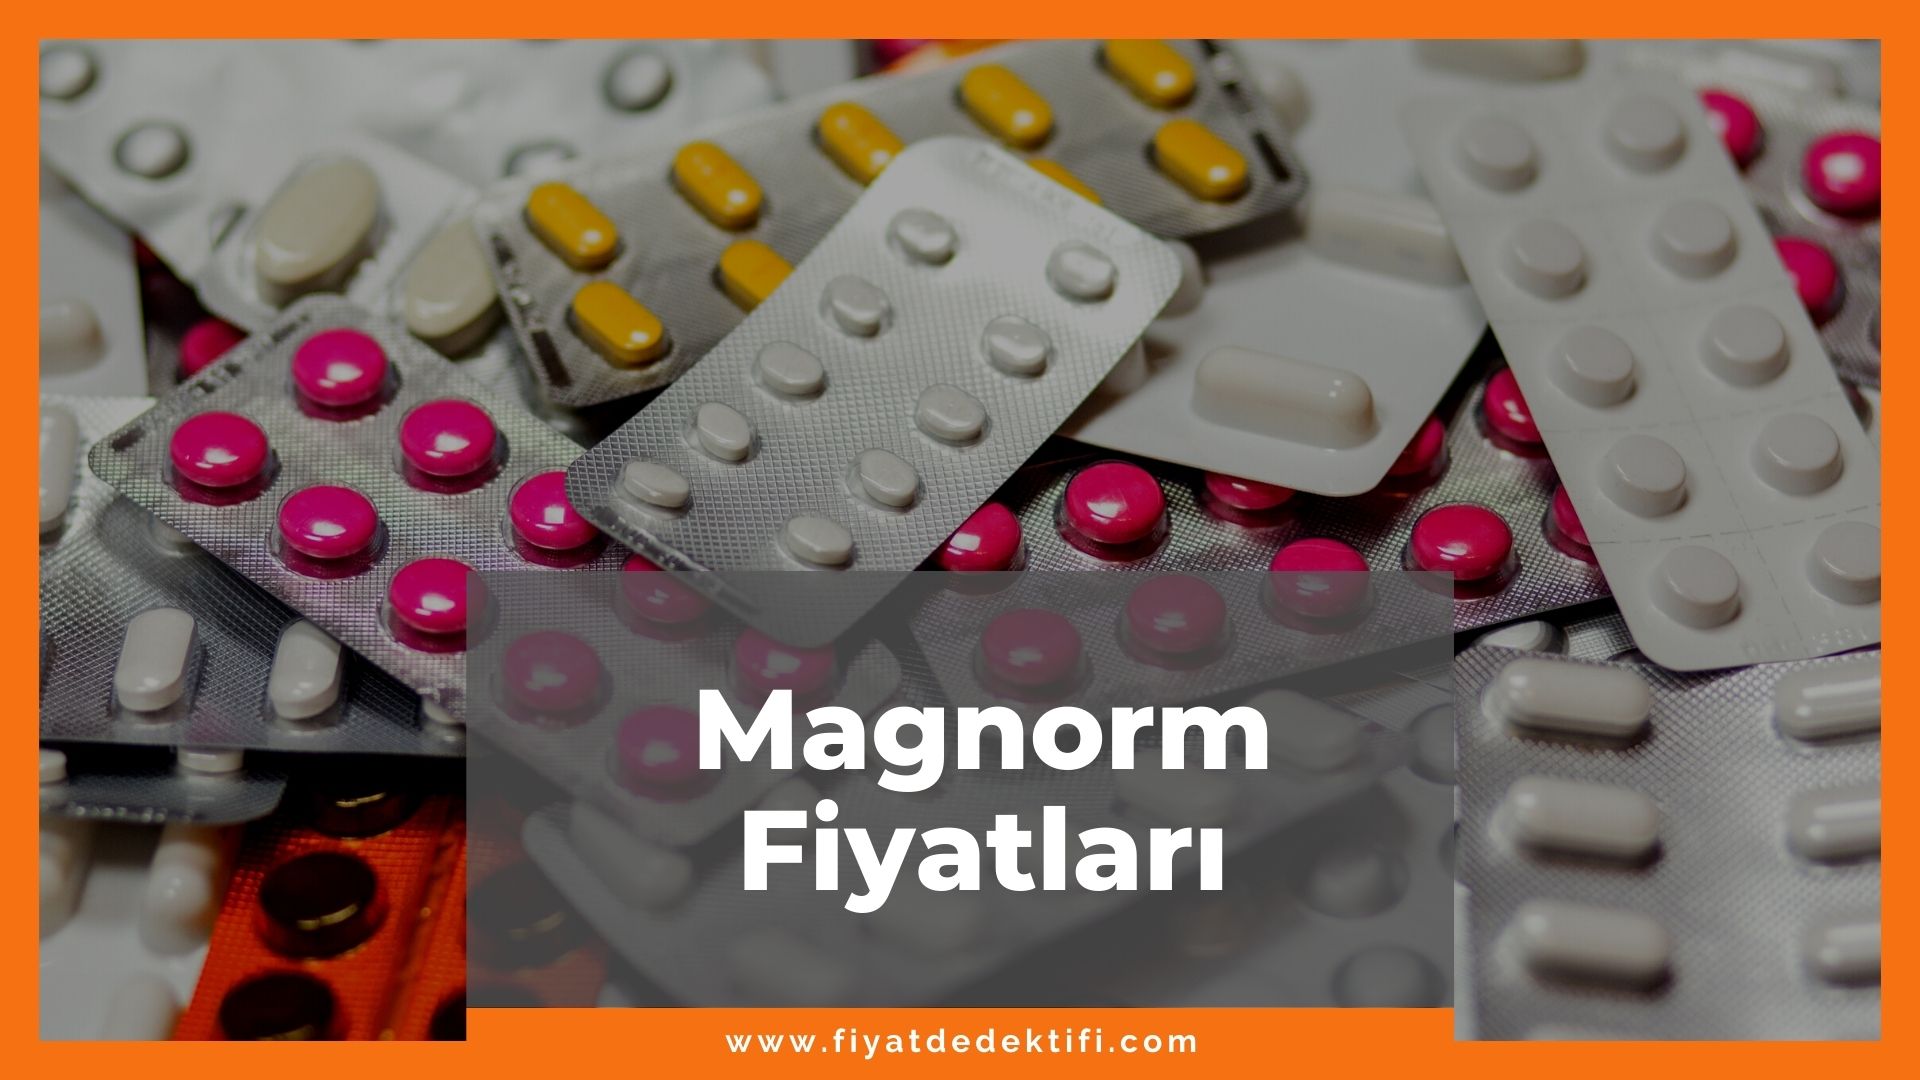 Magnorm Fiyat 2021, Magnorm Fiyatı, Magnorm 365 mg Fiyatı, magnorm zamlandı mı, magnorm zamlı fiyatı ne kadar kaç tl